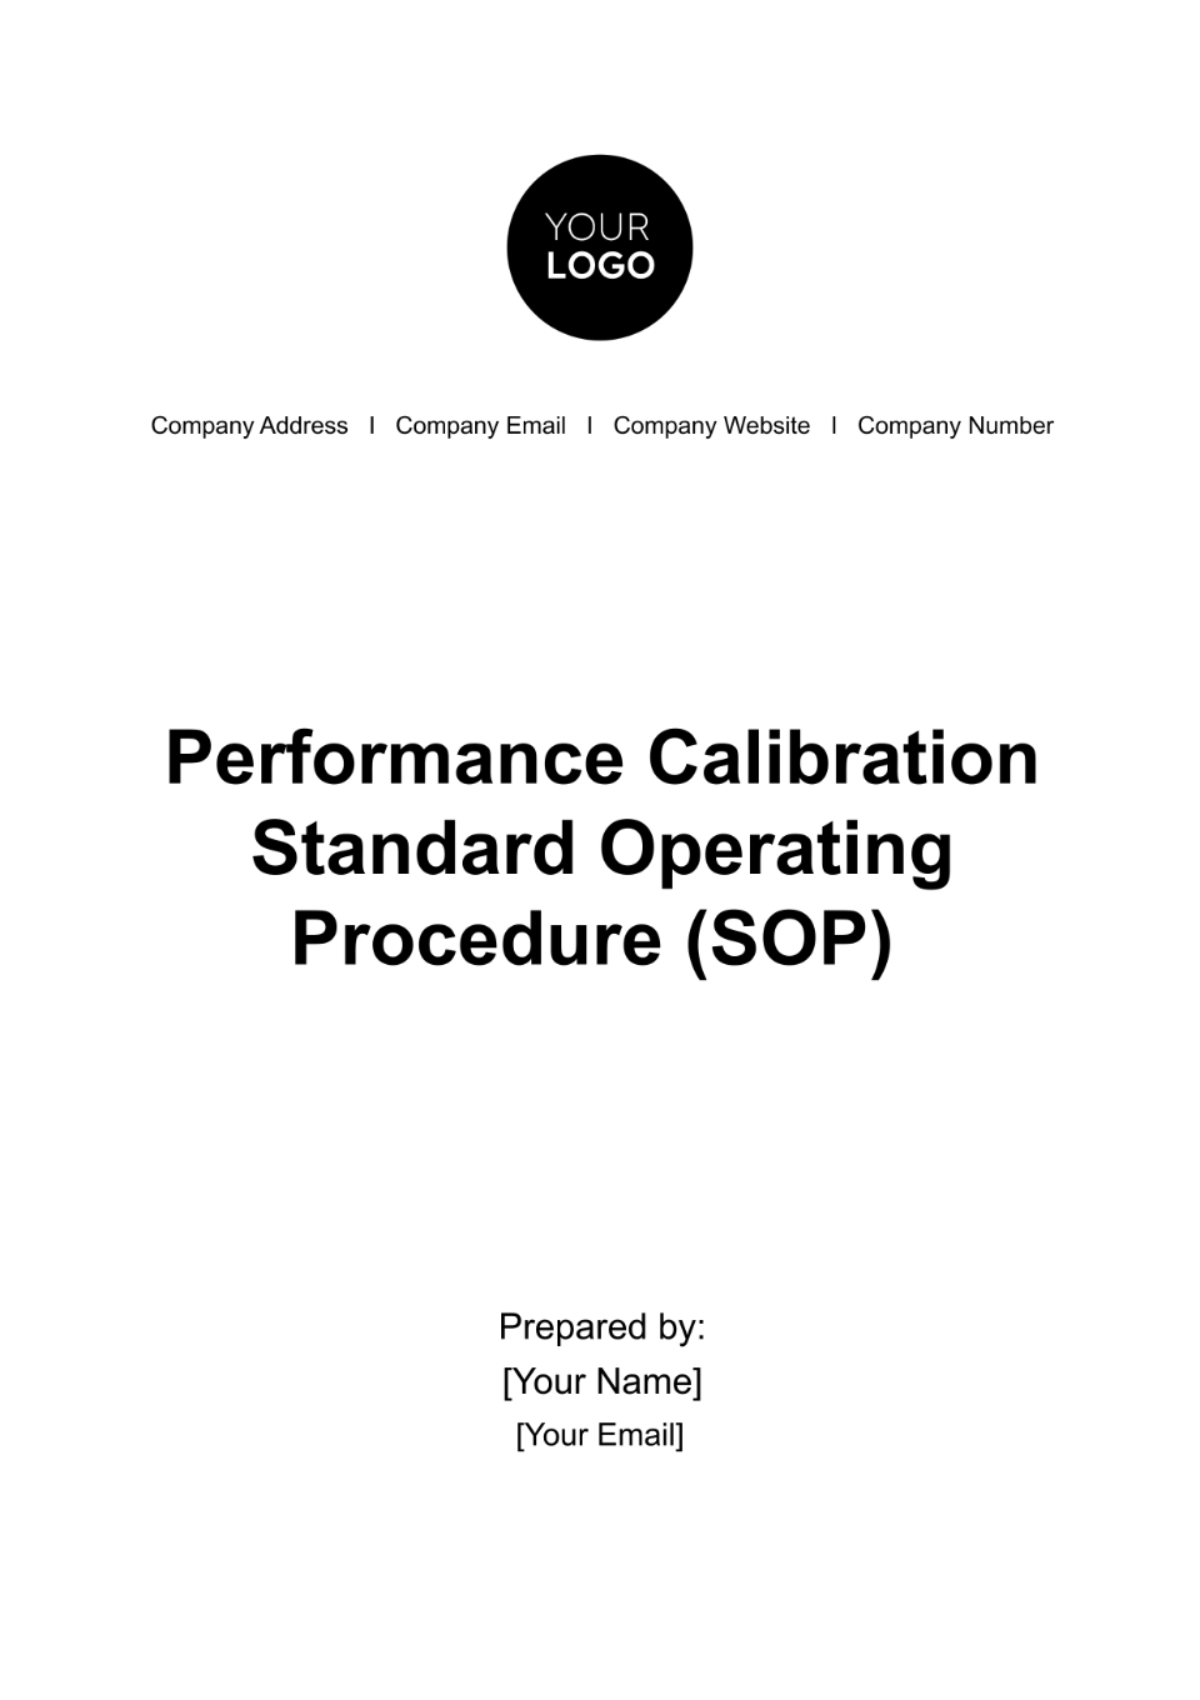 Free Performance Calibration Standard Operating Procedure (SOP) HR Template